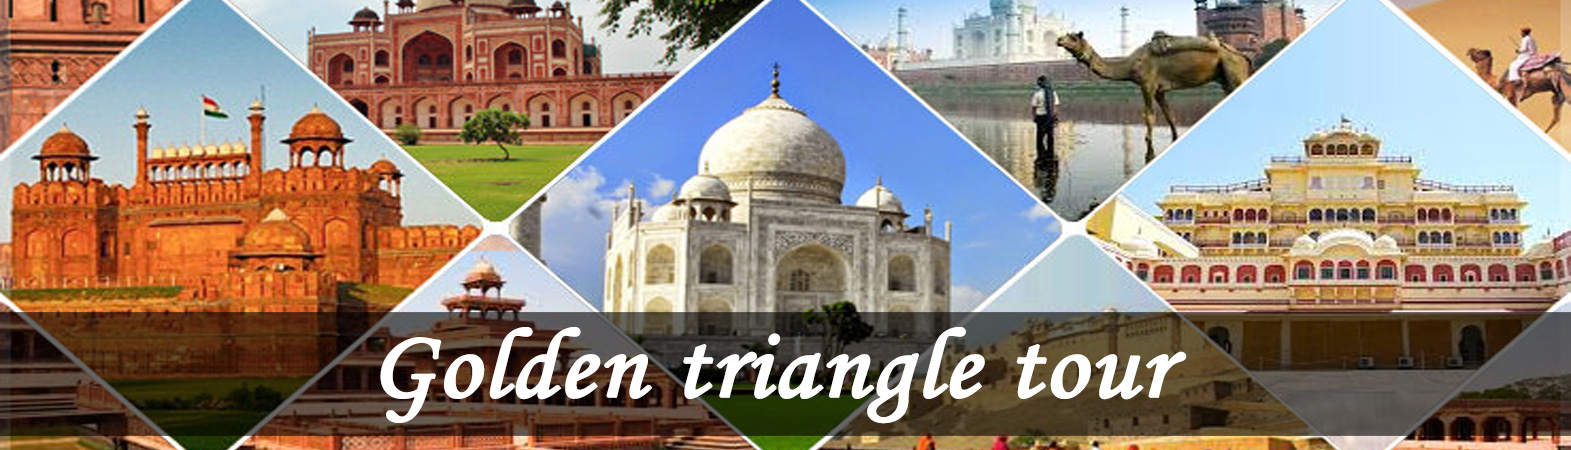 Golden Triangle tour in New Delhi | Delhi Travel Packages